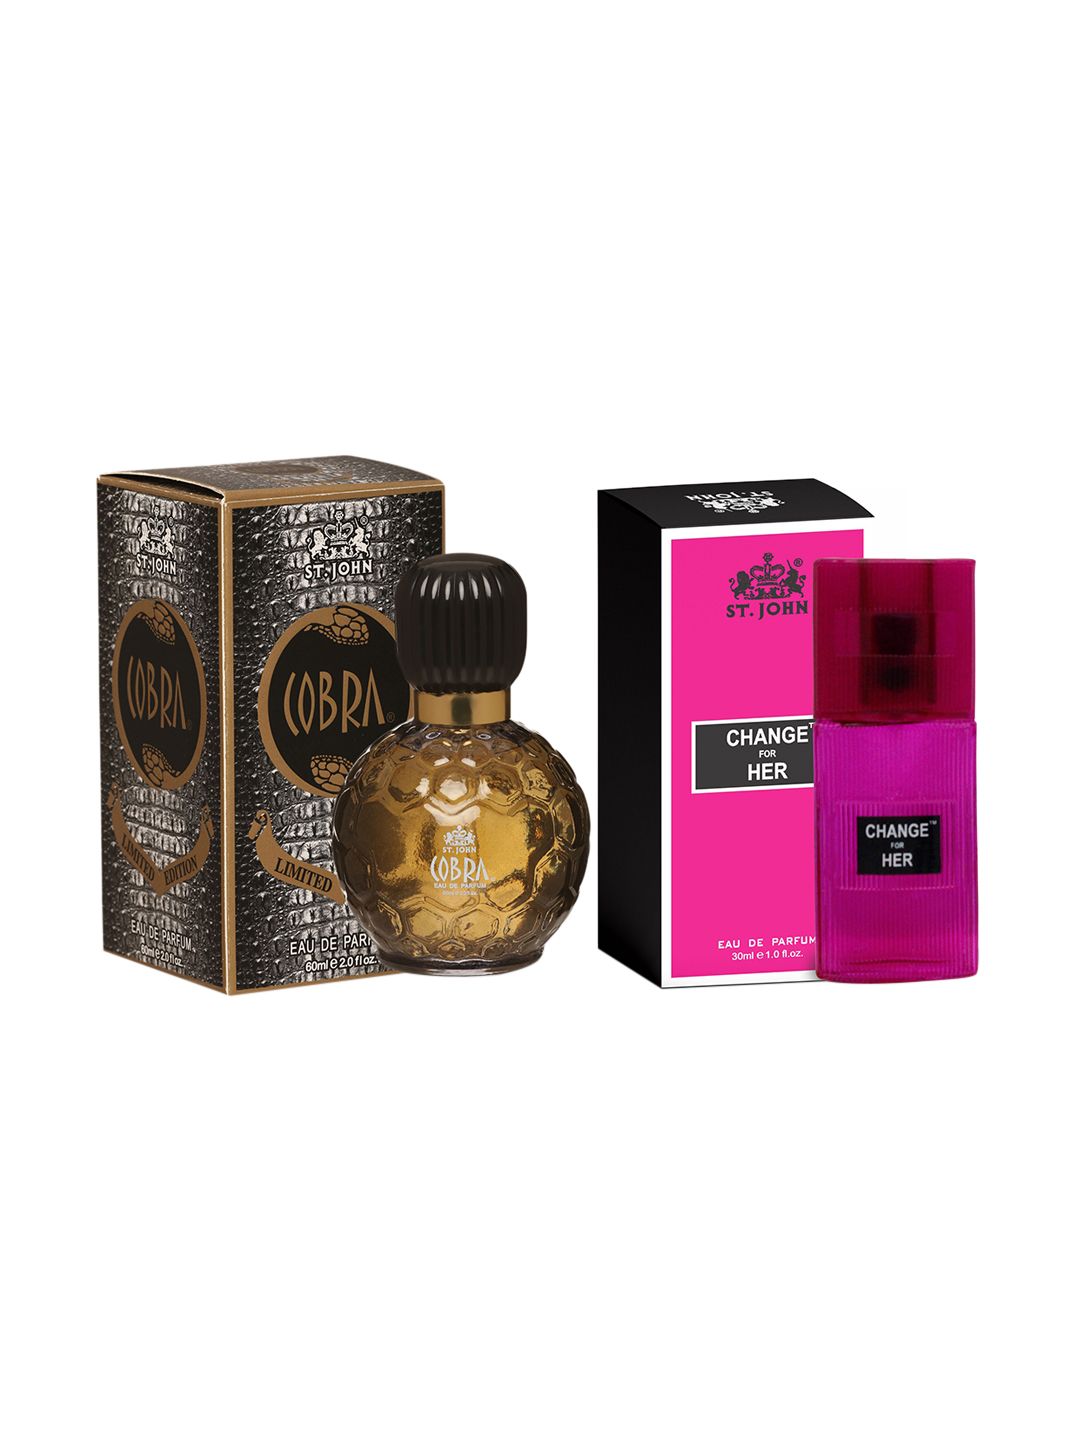 St. John Set of Cobra 60 ml & Change for Her Eau De Parfum 30 ml Price in India